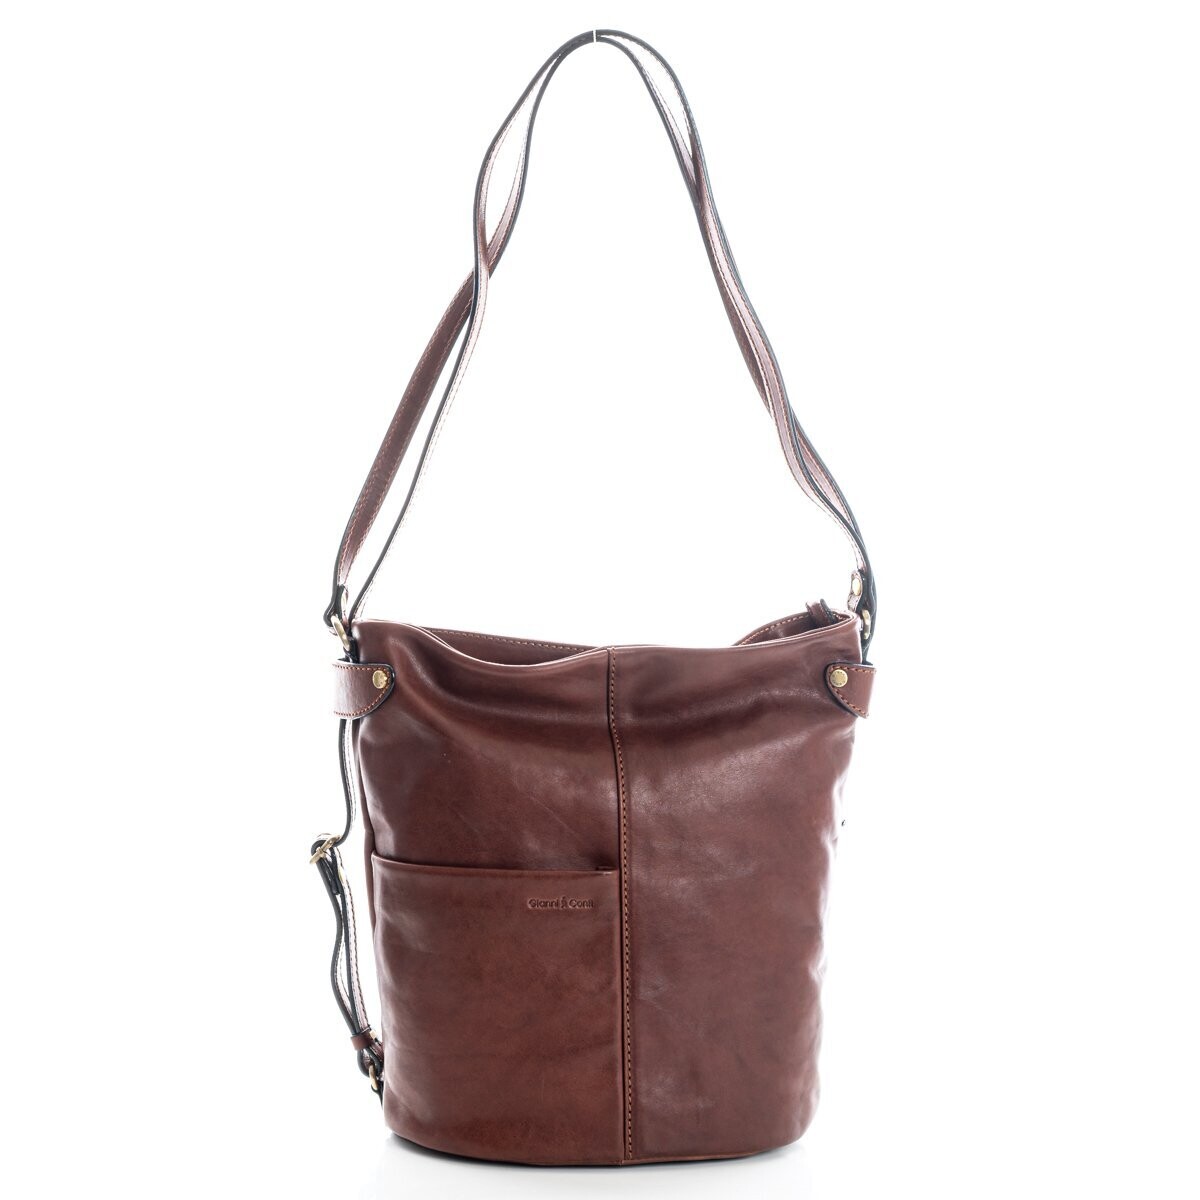 Gianni Conti Backpack/Shoulder Bag